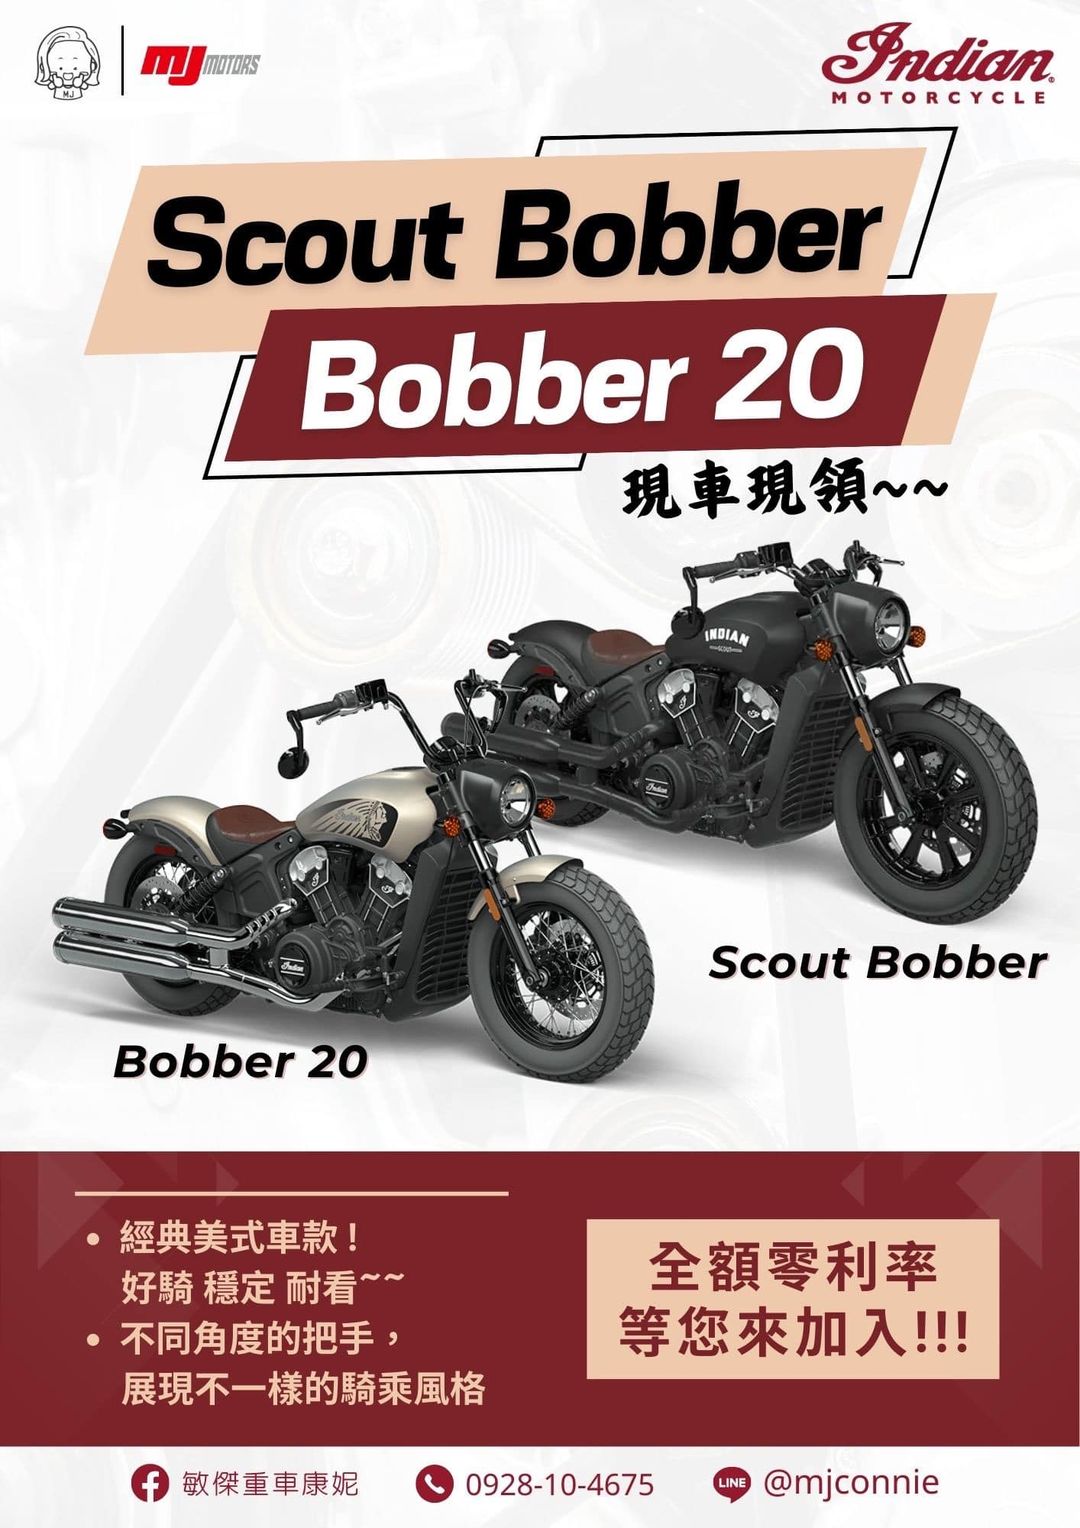 INDIAN MOTORCYC Scout Bobber新車出售中 『敏傑康妮』Indian Scout Bobber &  Scout Bobber 20 會讓您變更帥！有很讚的購車方案 | 敏傑車業資深銷售專員 康妮 Connie